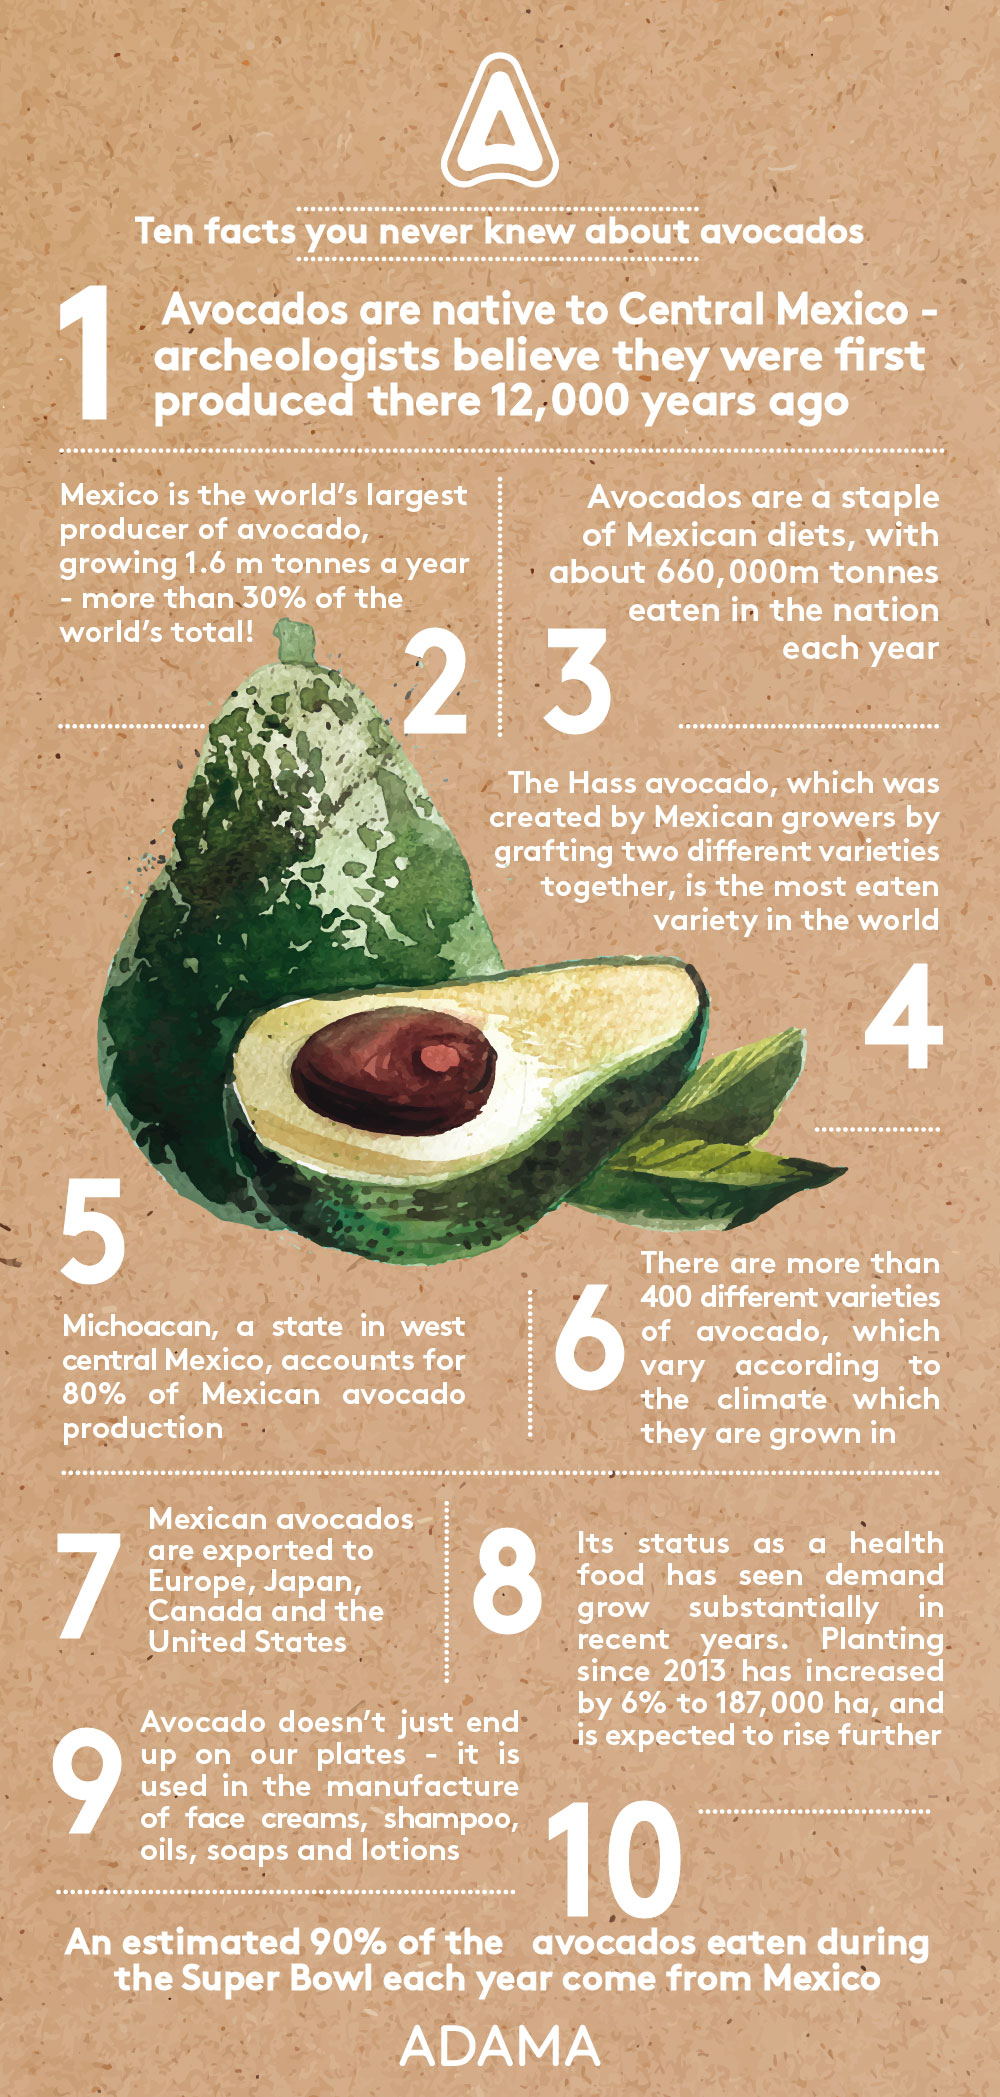 Ten Facts about Avocados